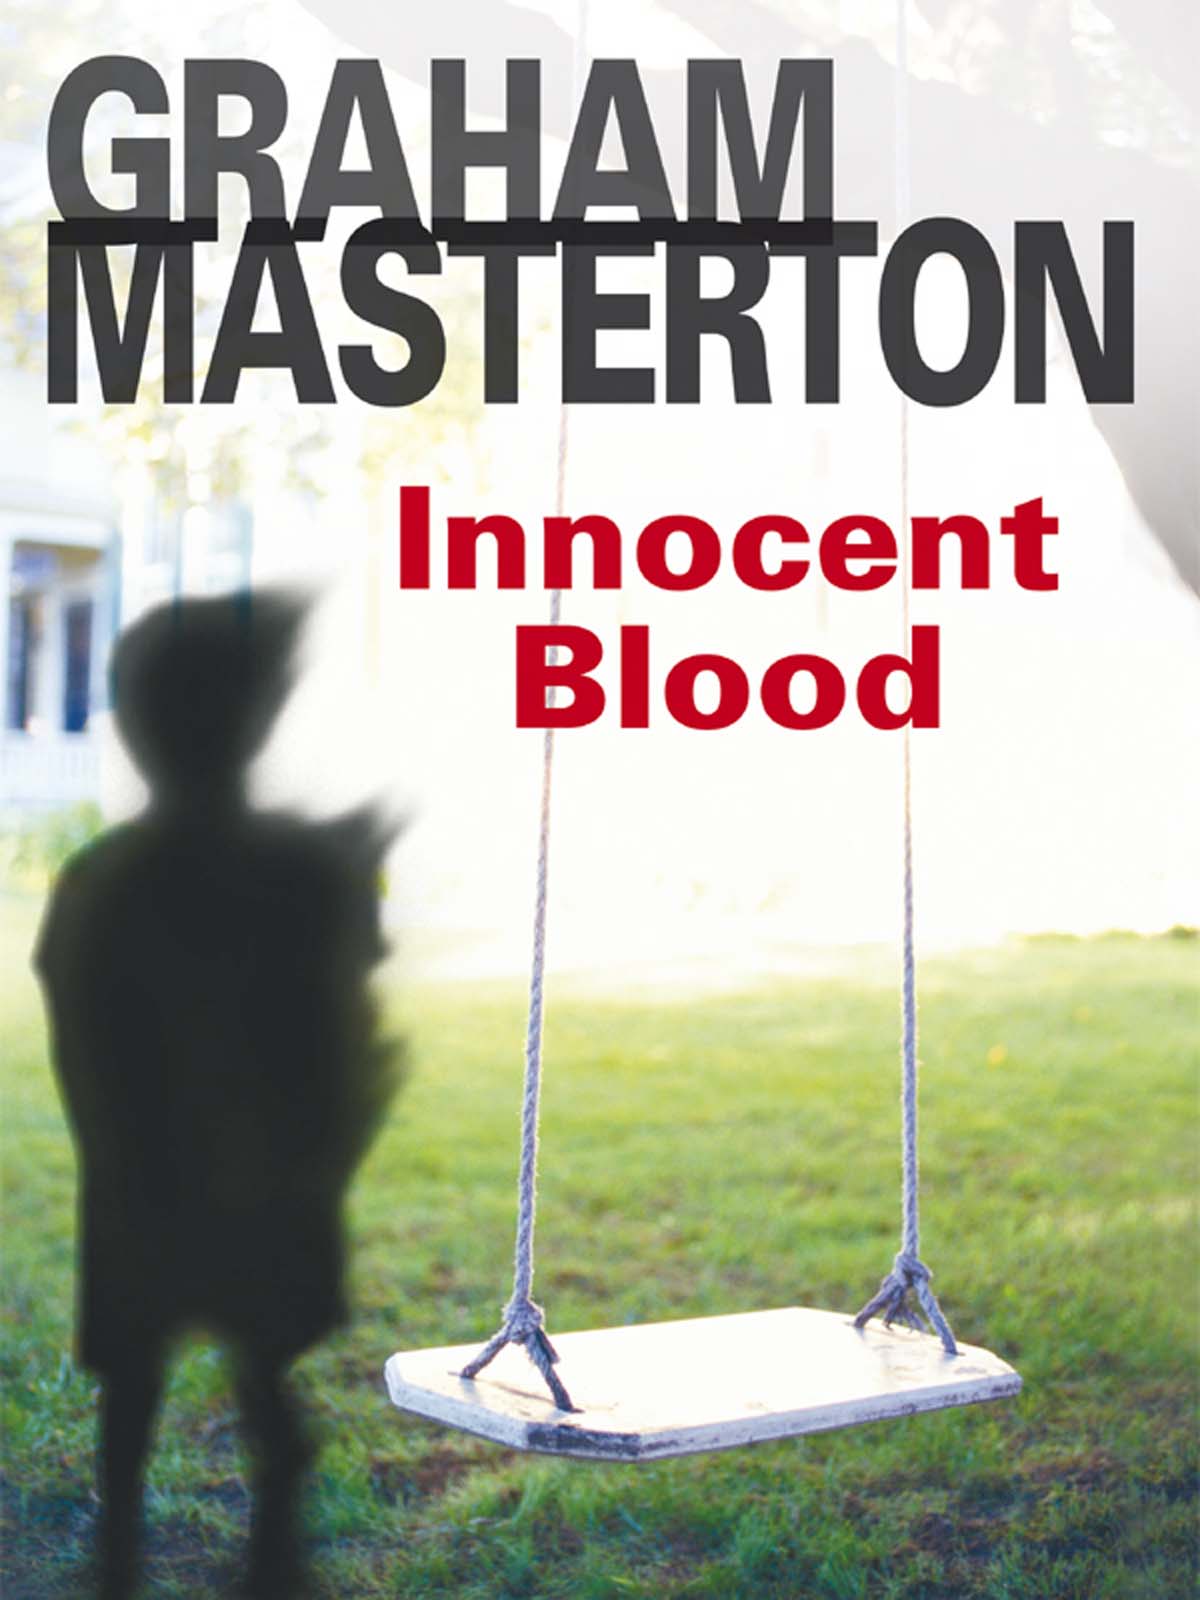 Innocent Blood (2005) by Graham Masterton